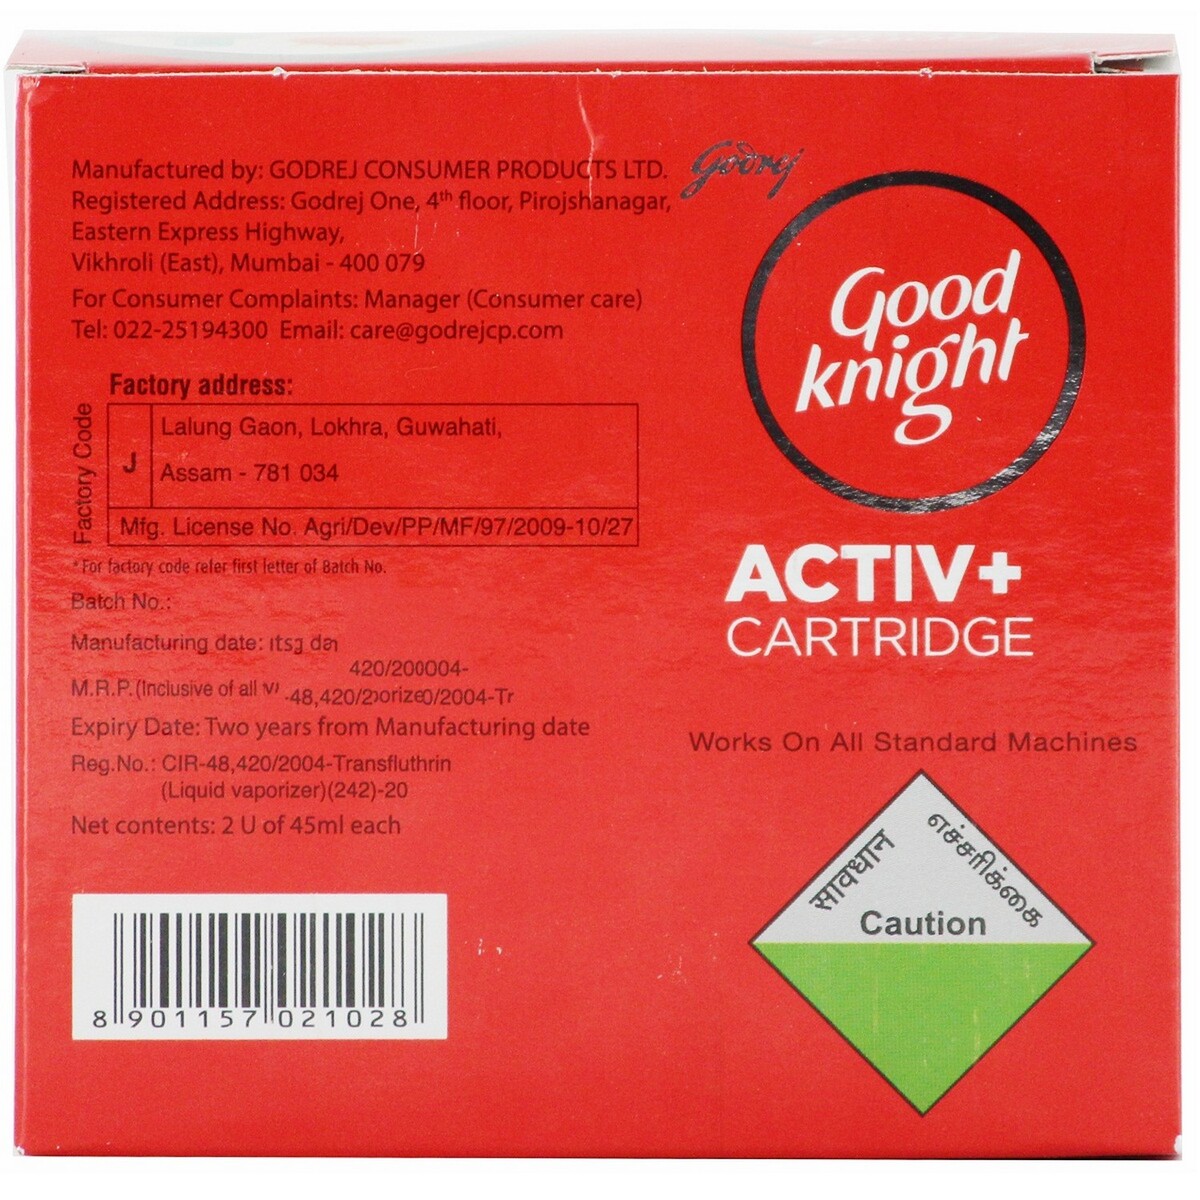 Good Knight Active+ Cartridge 2's